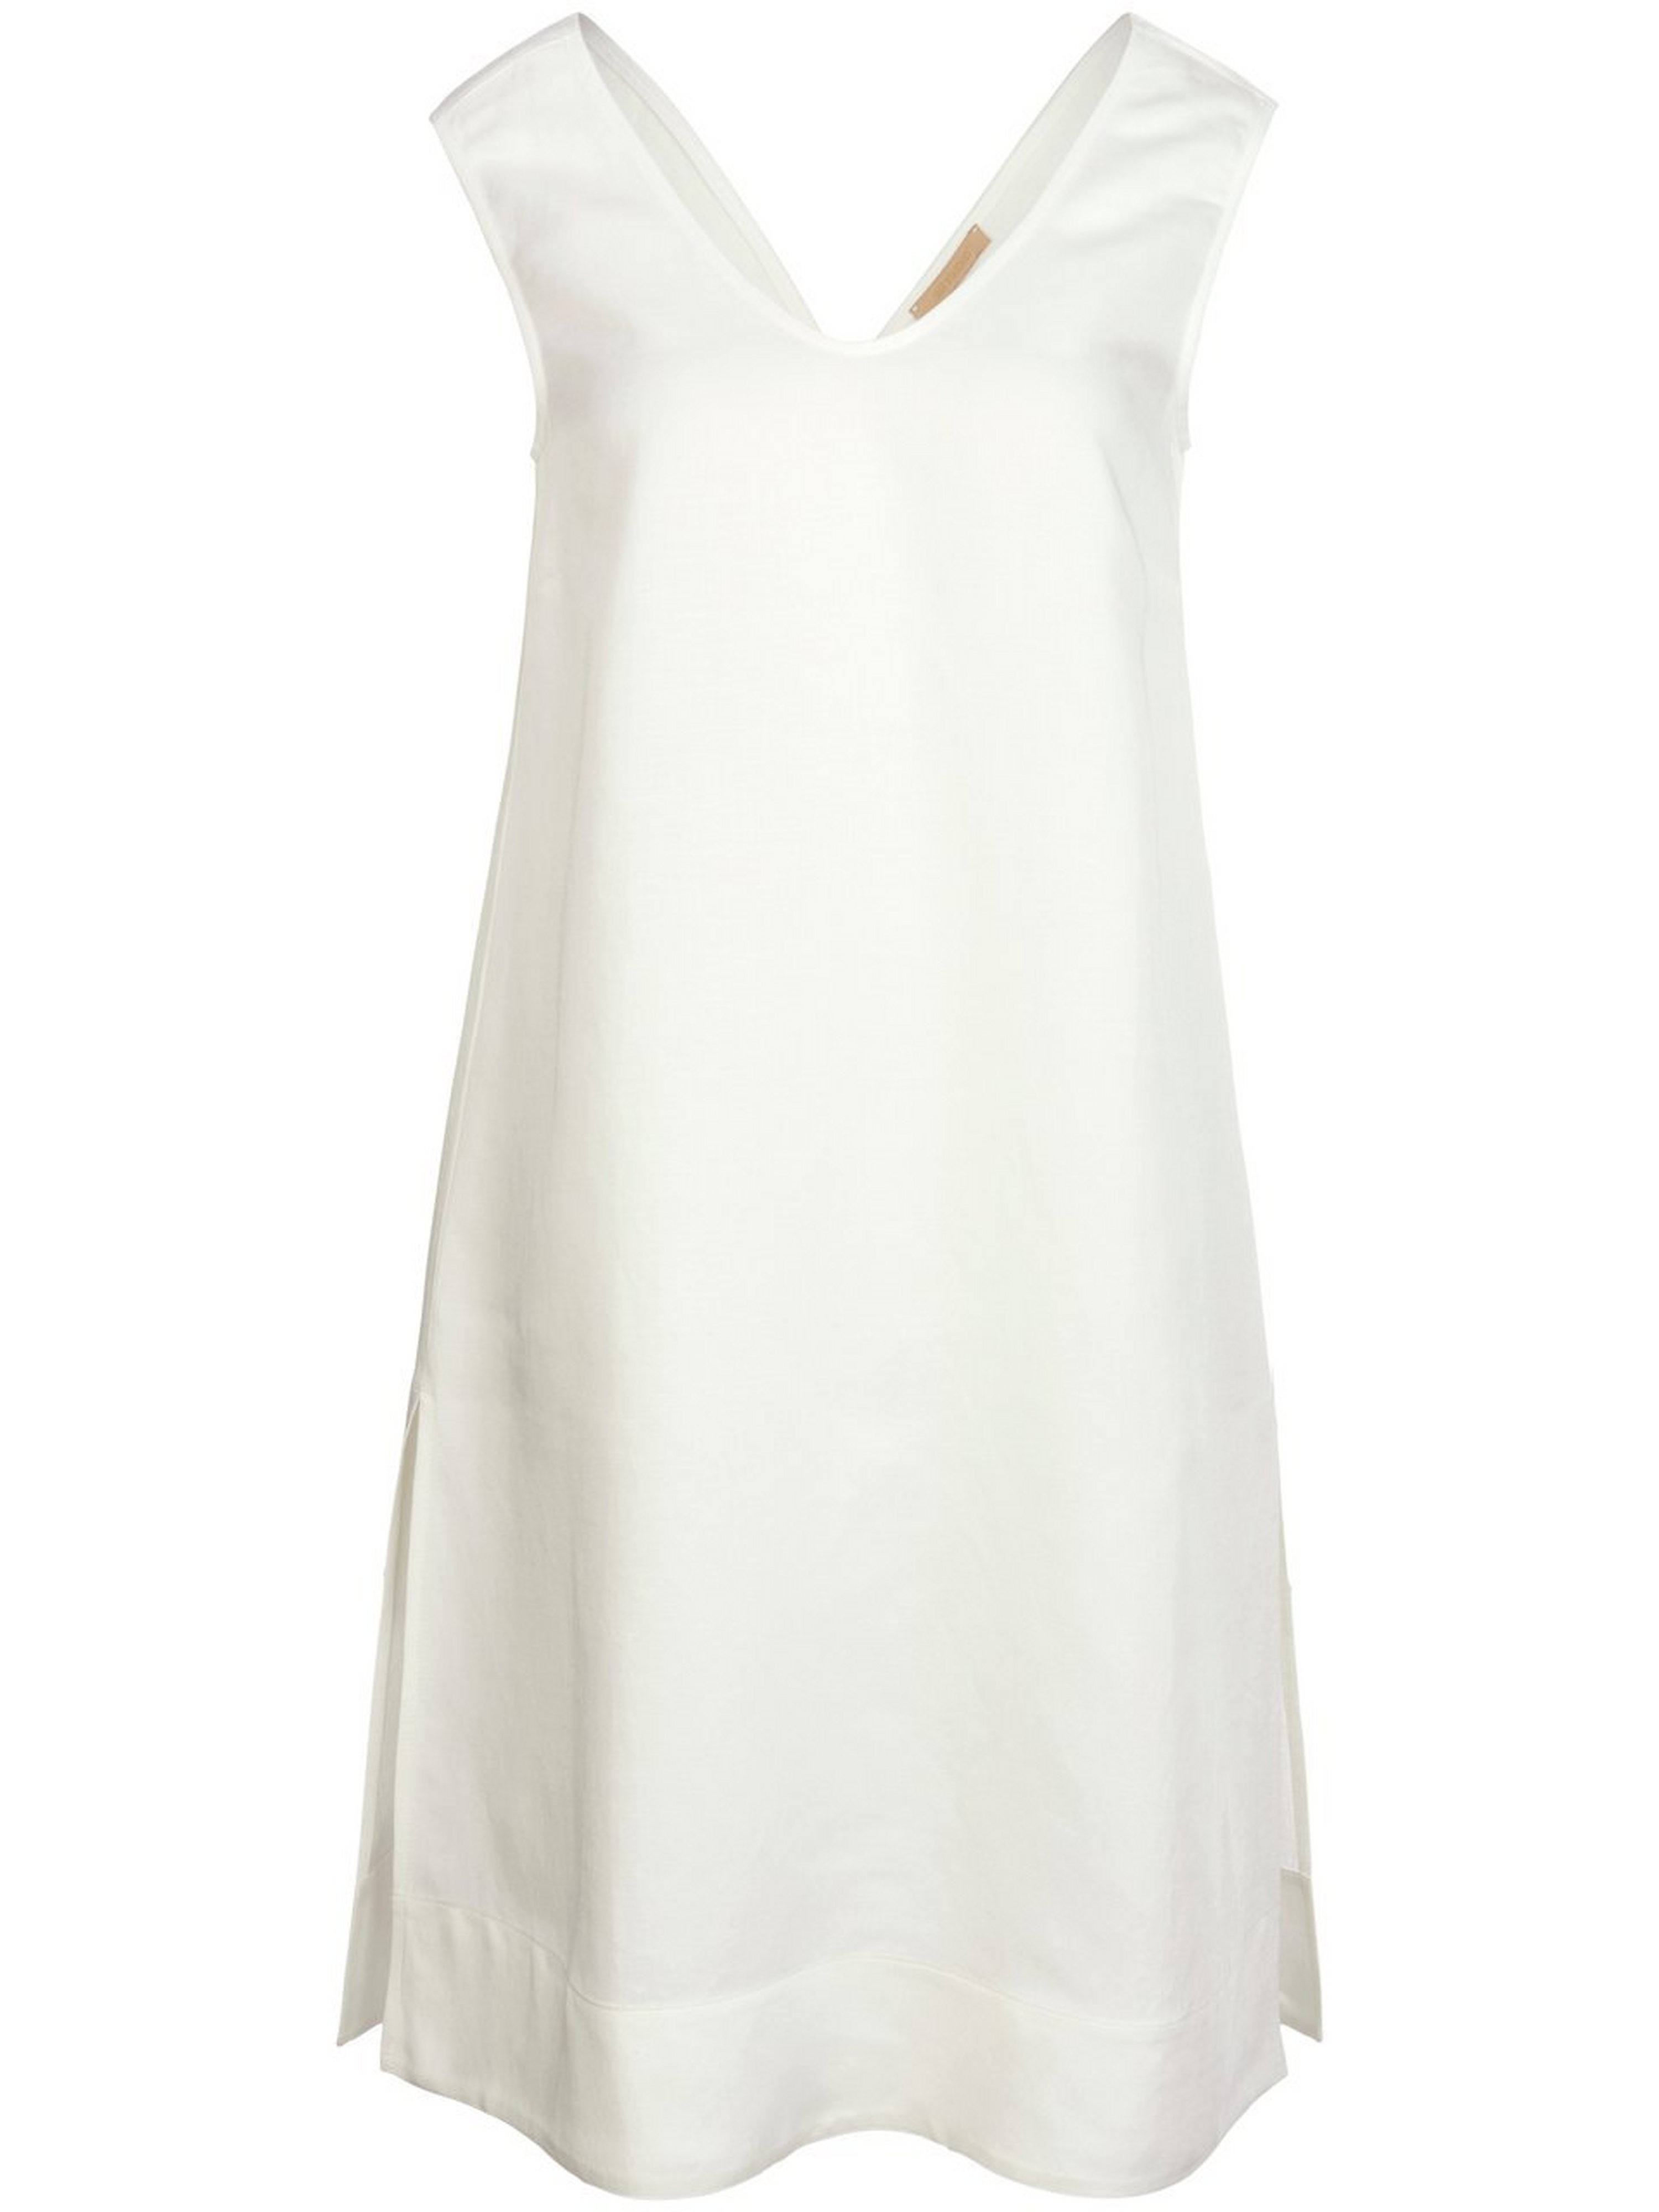 La robe sans manches  tRUE STANDARD blanc taille 40